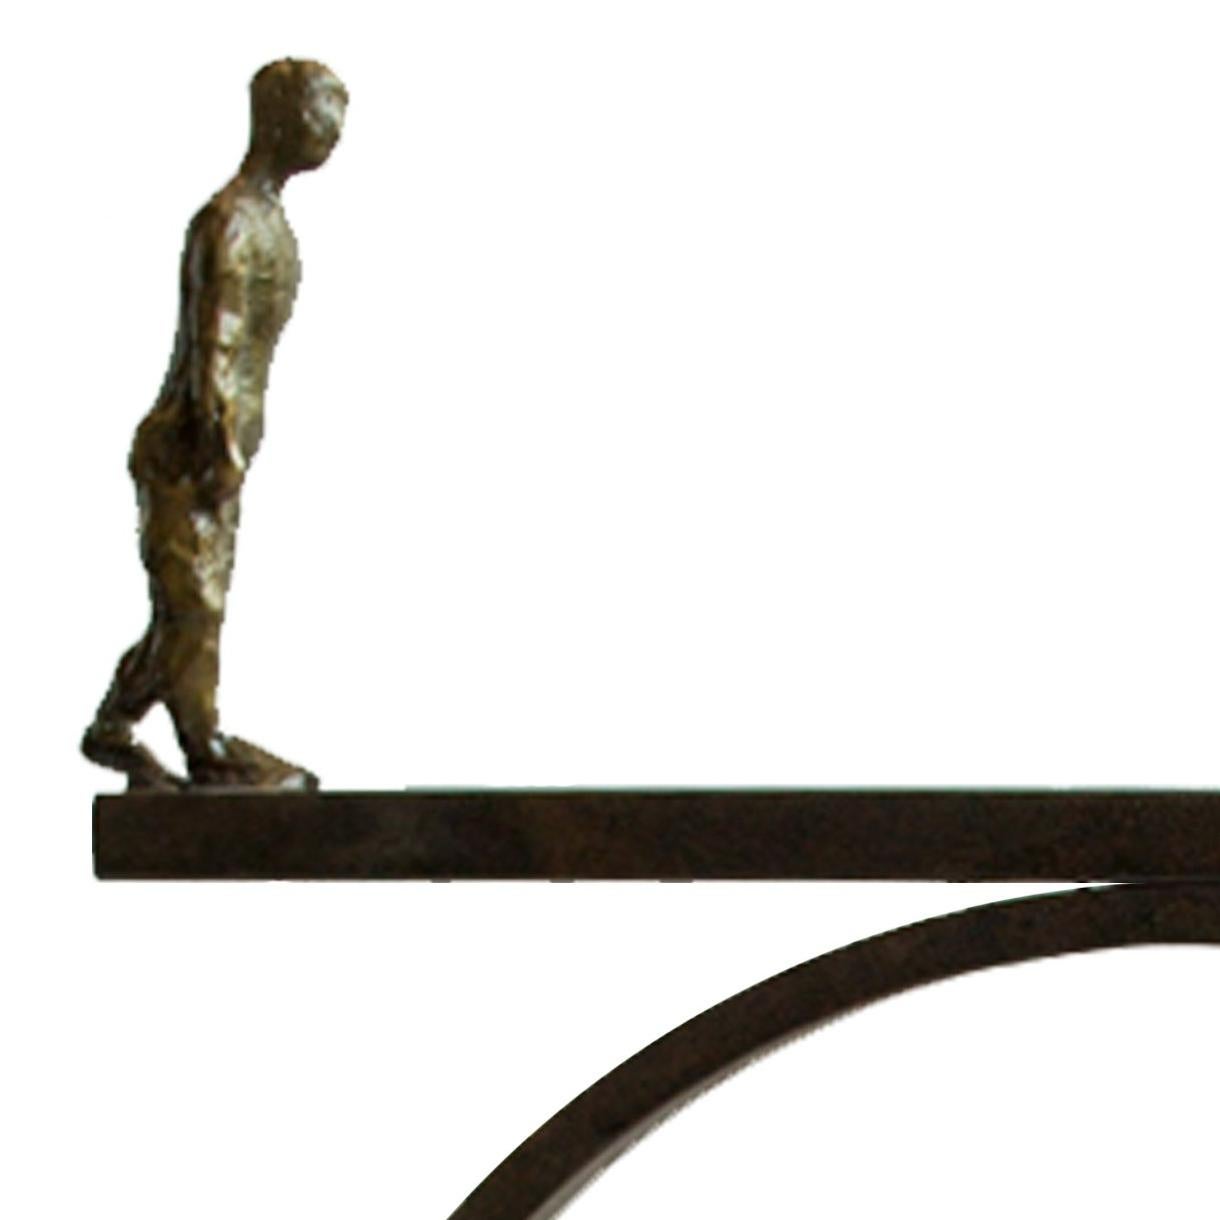 Balance 2 31/50 - Sculpture by Giuseppe Palumbo